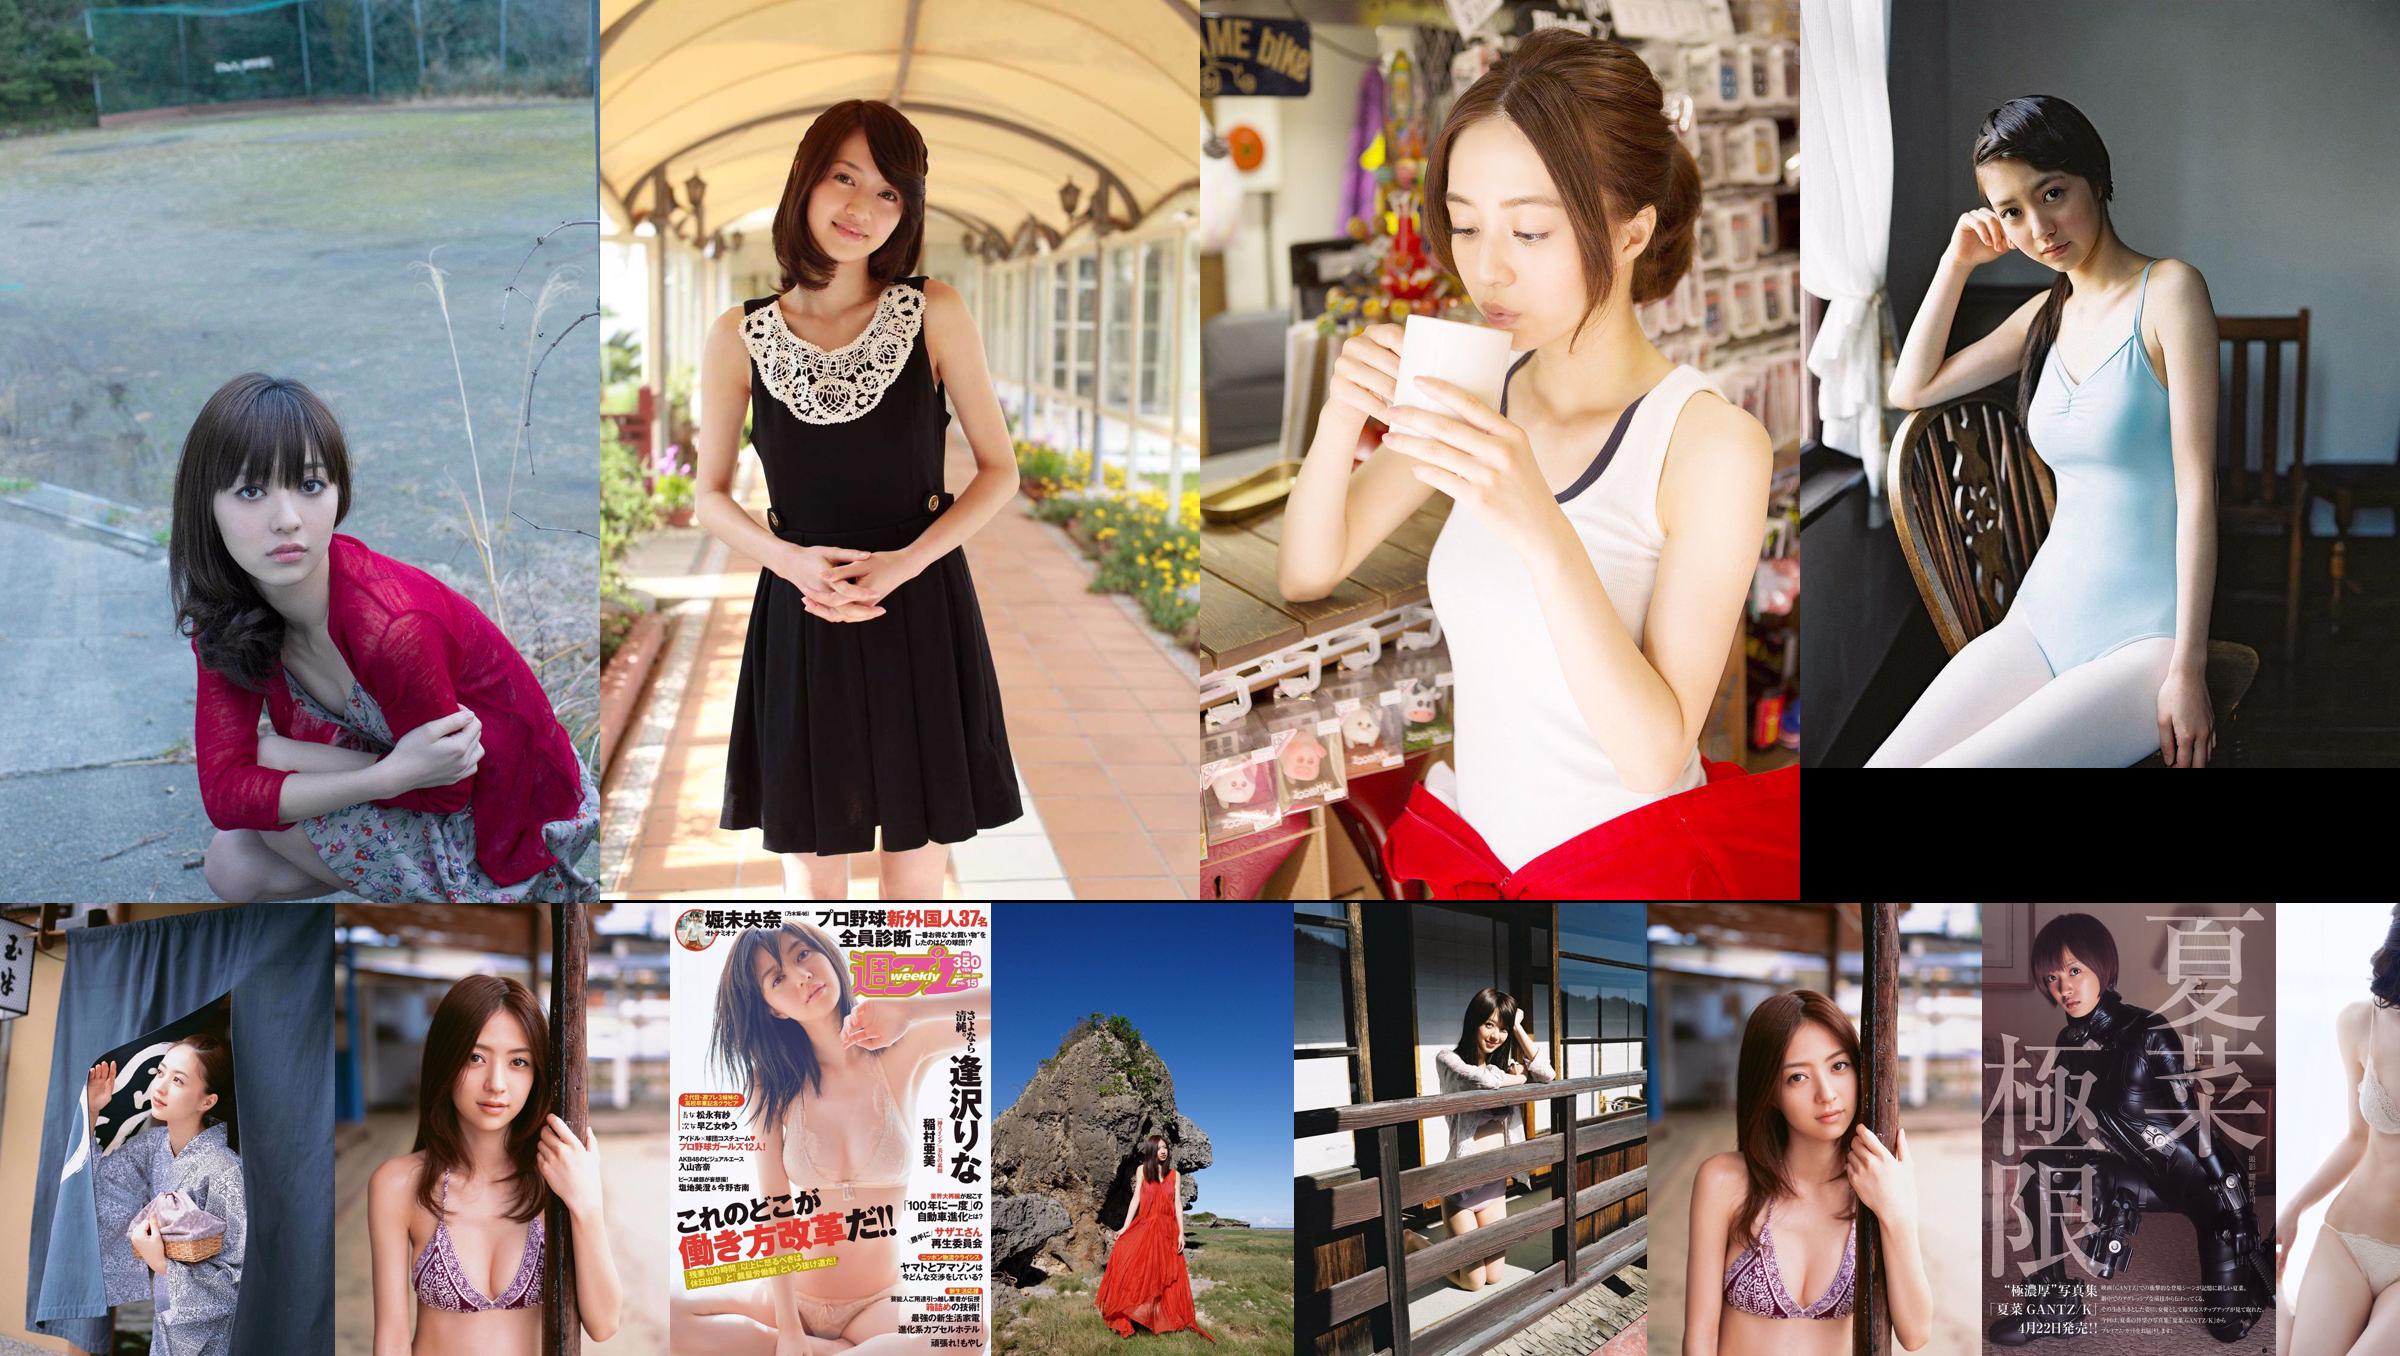 Rina Aizawa Rina Aizawa "Preciosa mañana" No.8e350f Página 2